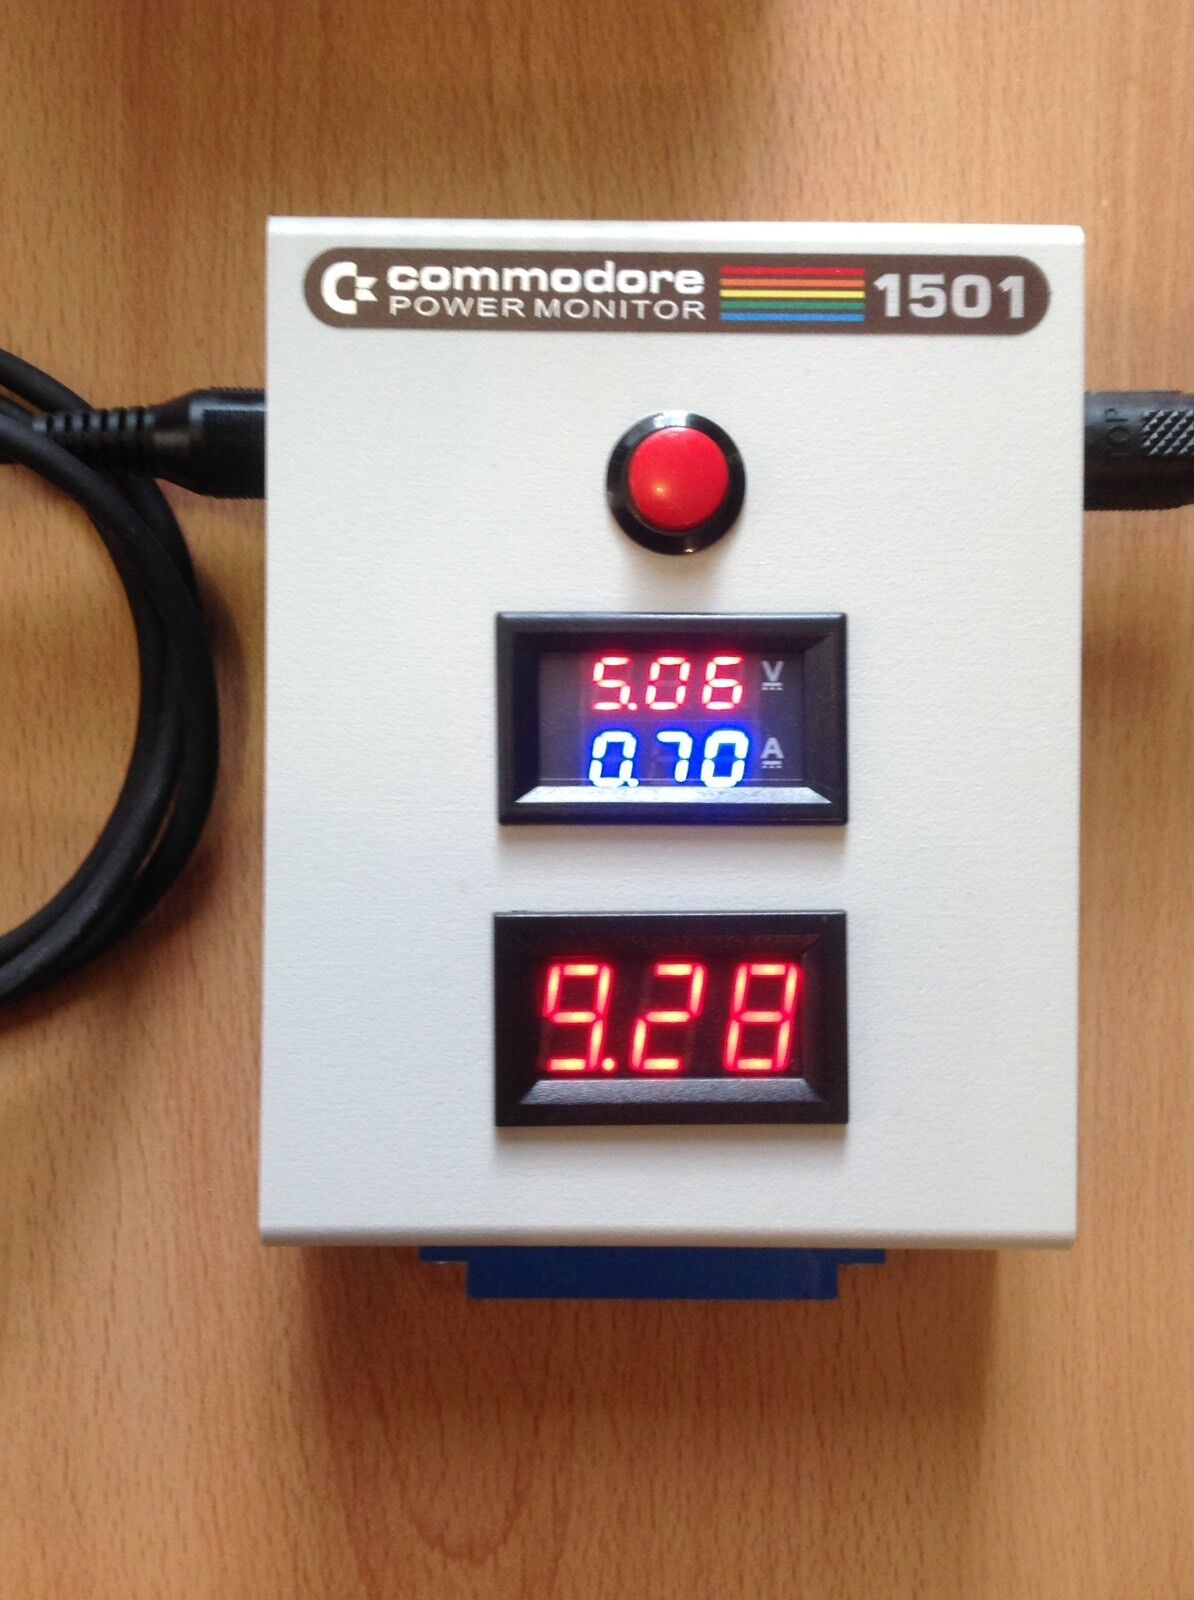 Commodore 64 Power Monitor II - C64 VIC20 C128 Plus4